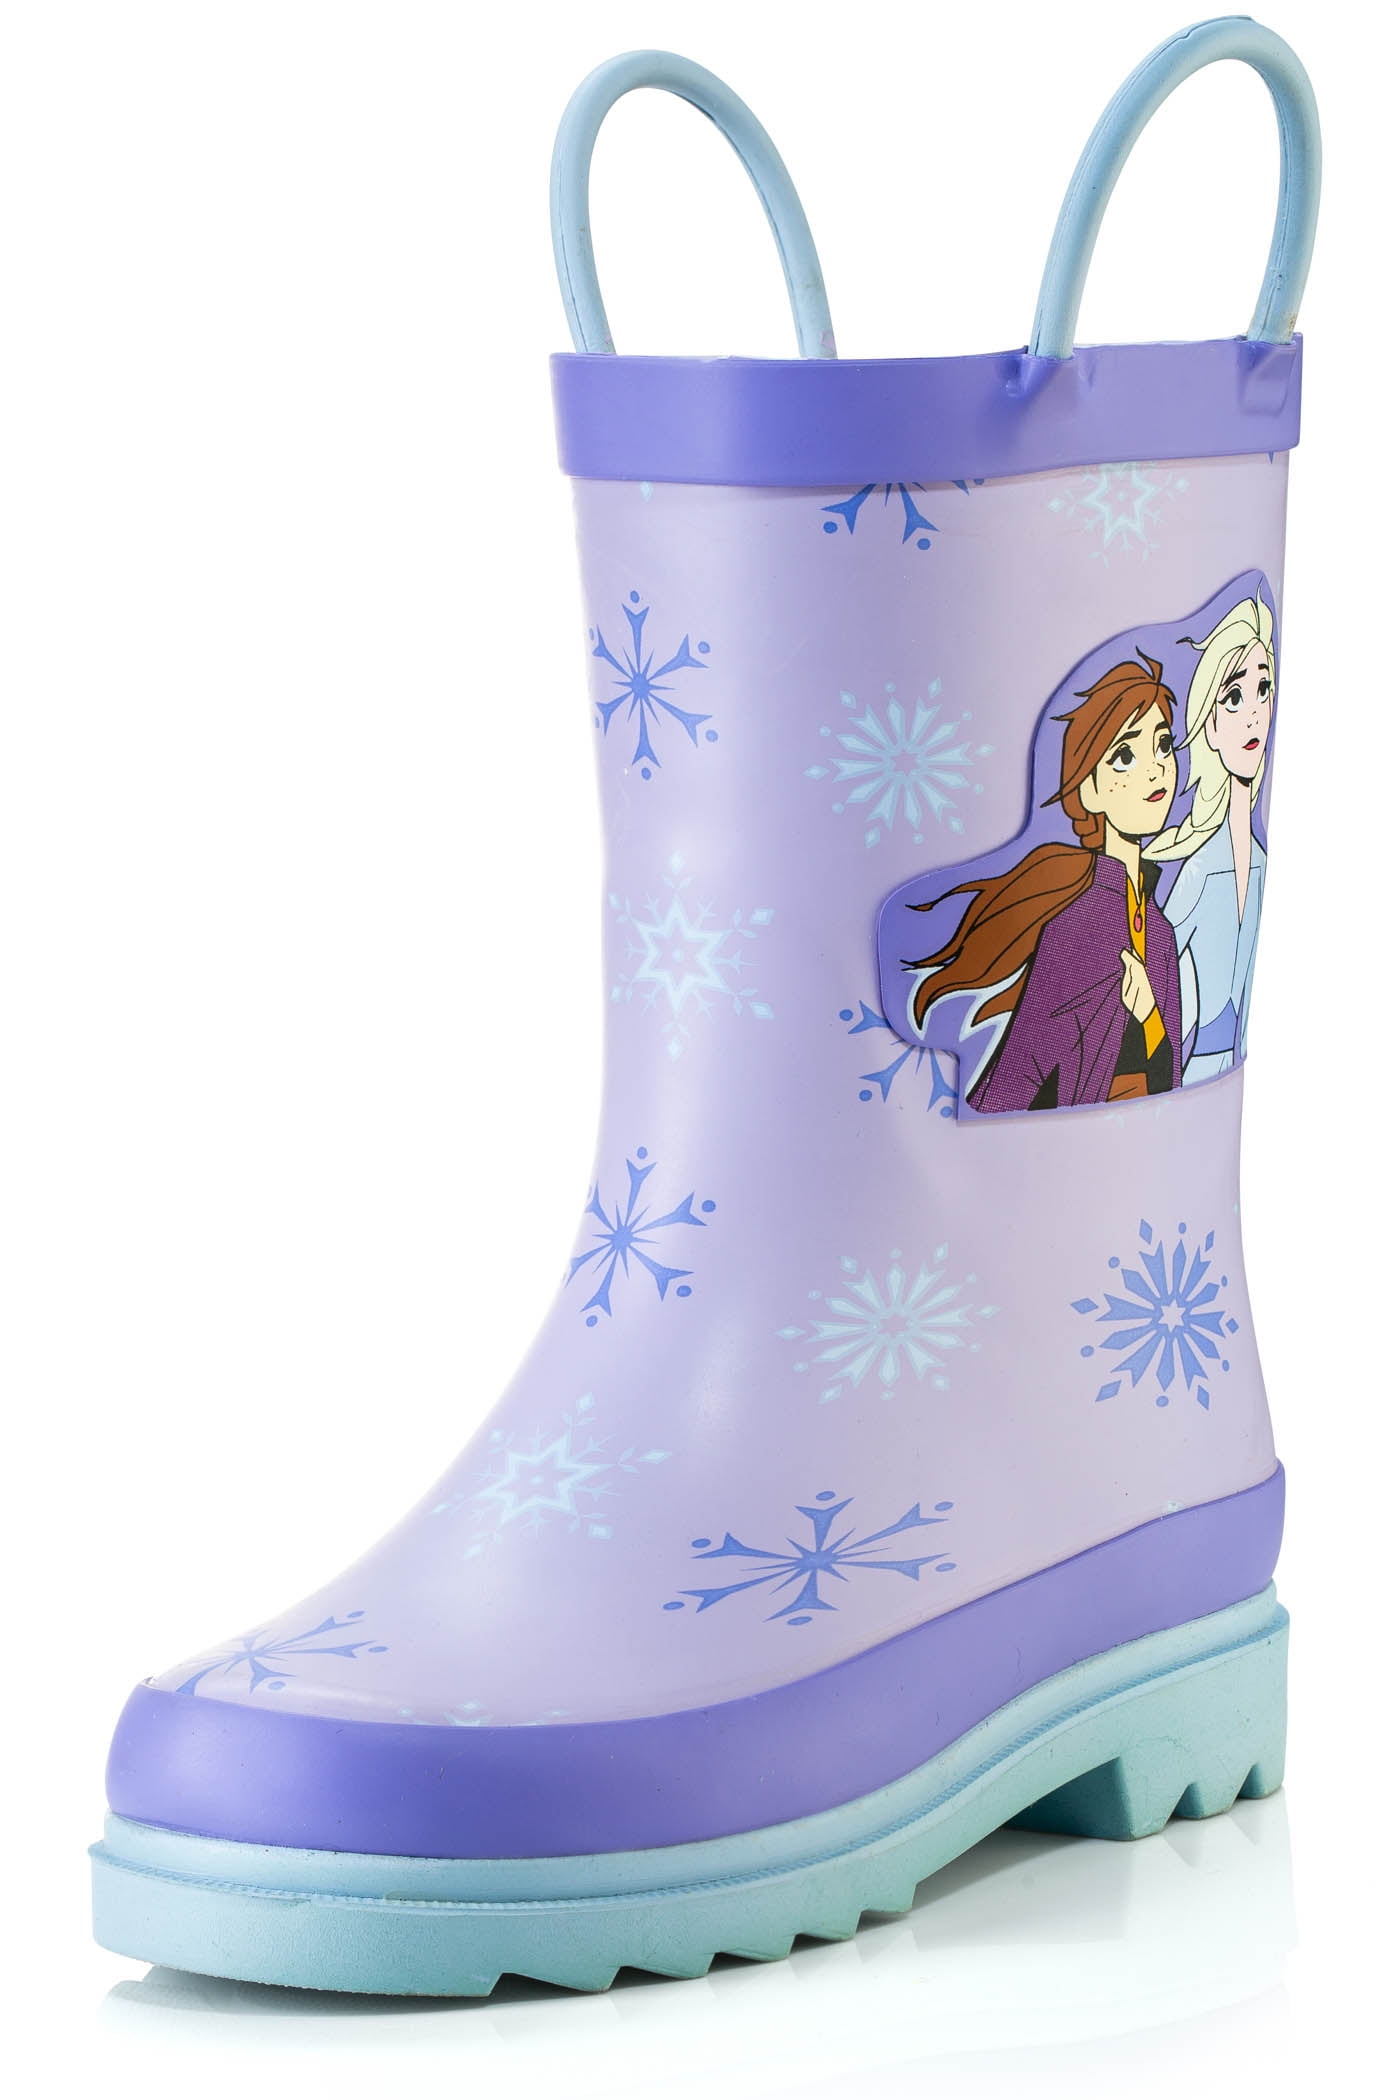 Disney Kids Girls Princess Character Printed Waterproof Easy-On Rubber Rain Boots   Toddler/Little Kids 